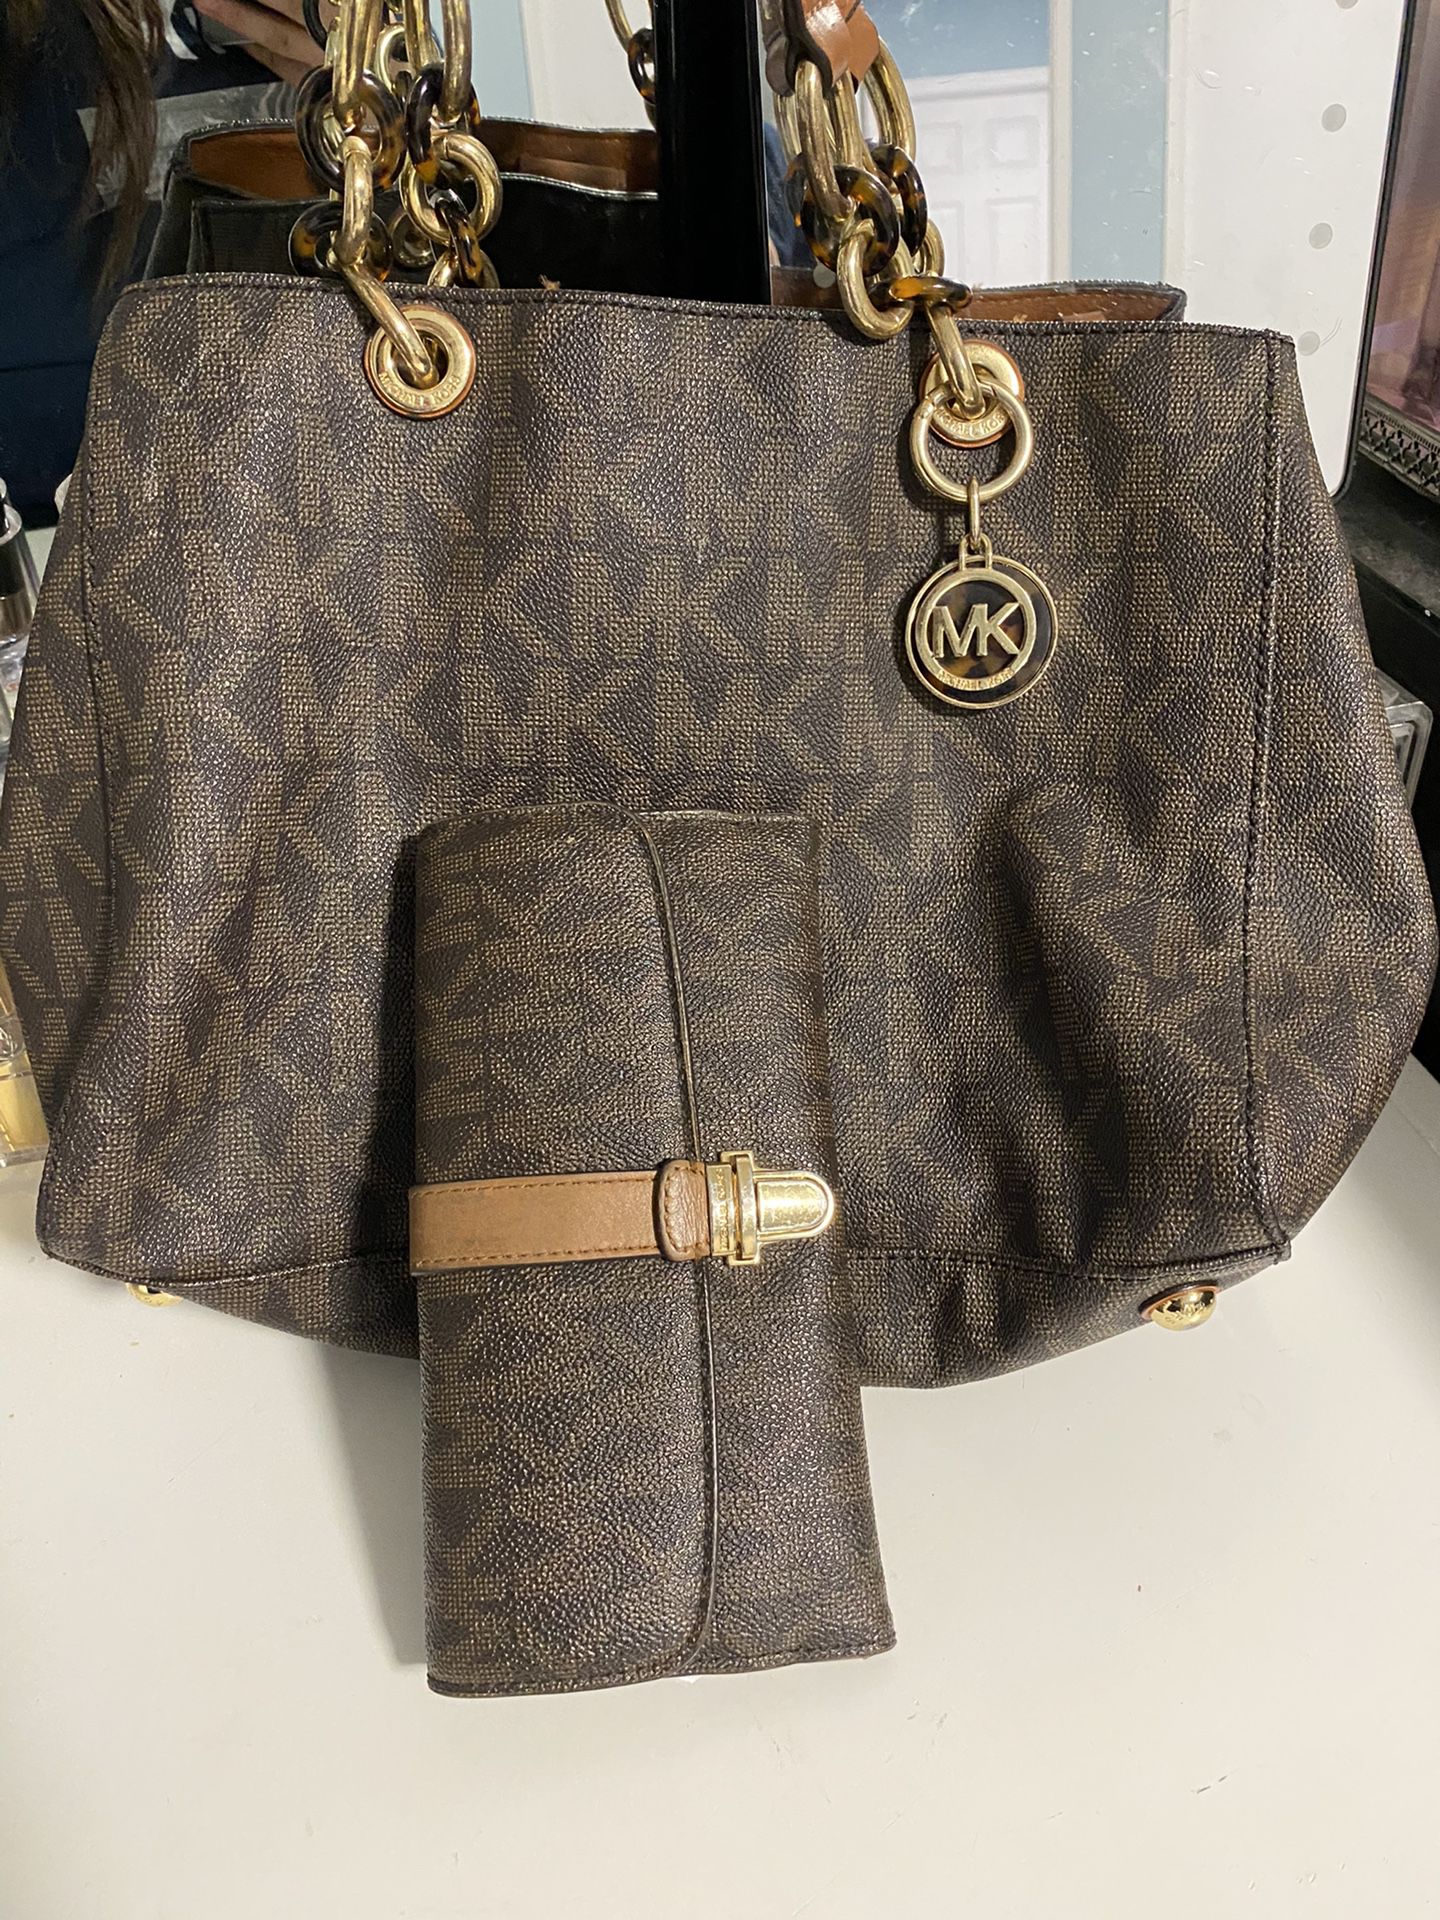 MK purse & wallet set